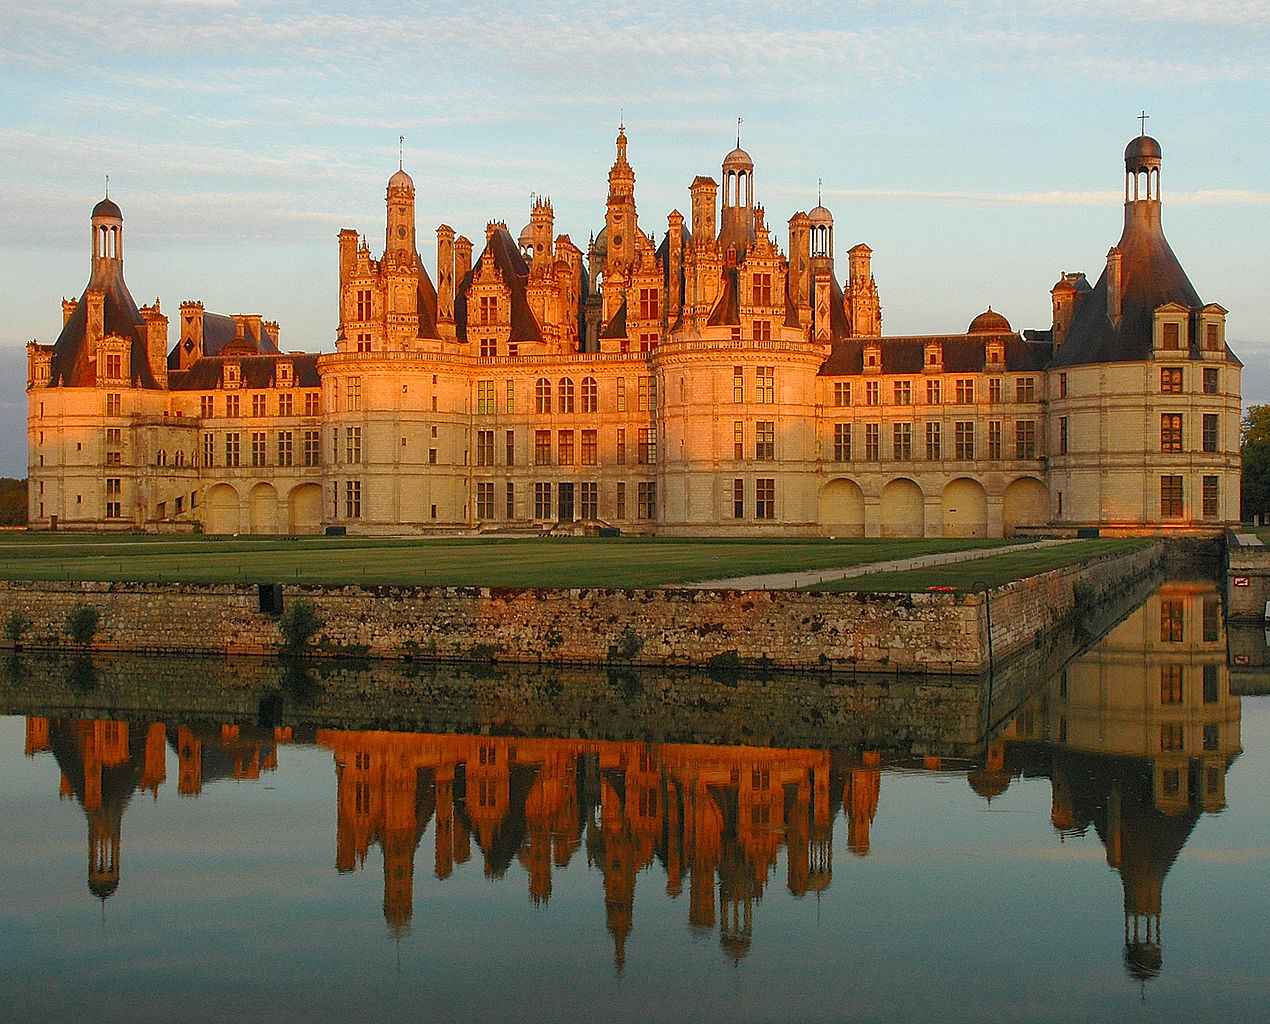 Château de Chambord - Wikipedia